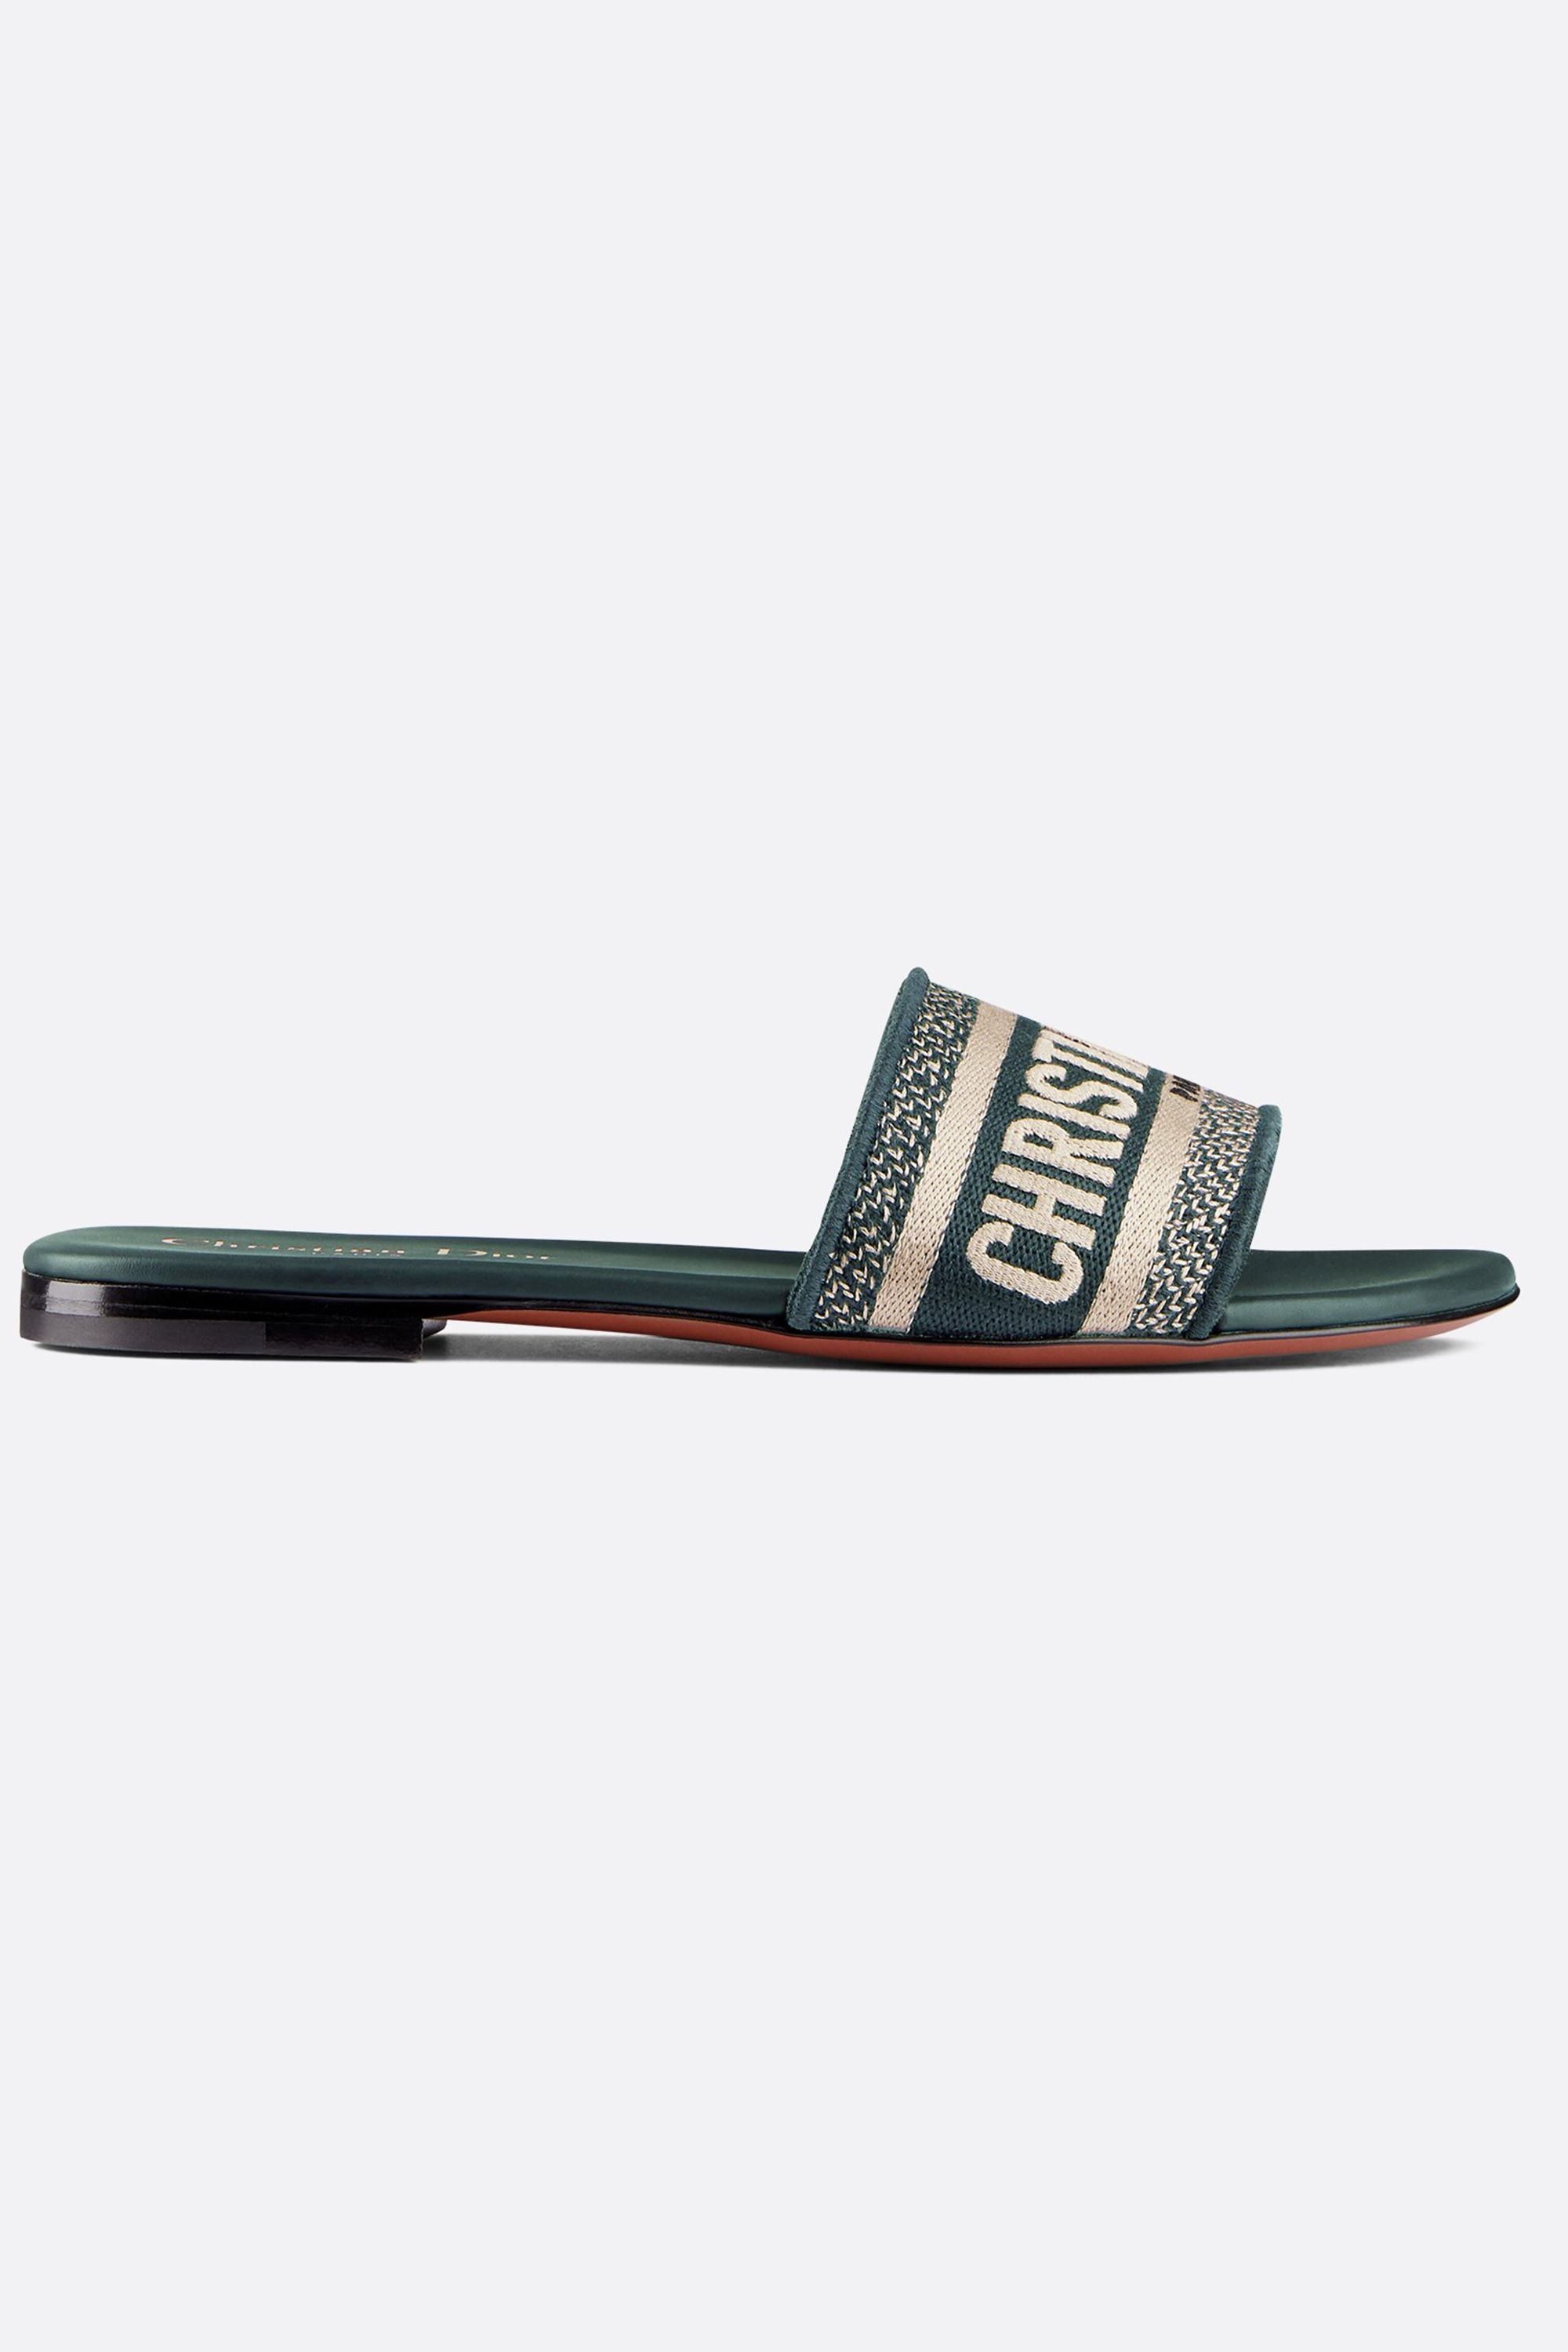 25 Best Summer Sandals 2019 Best Sliders Flat And Heeled Summer